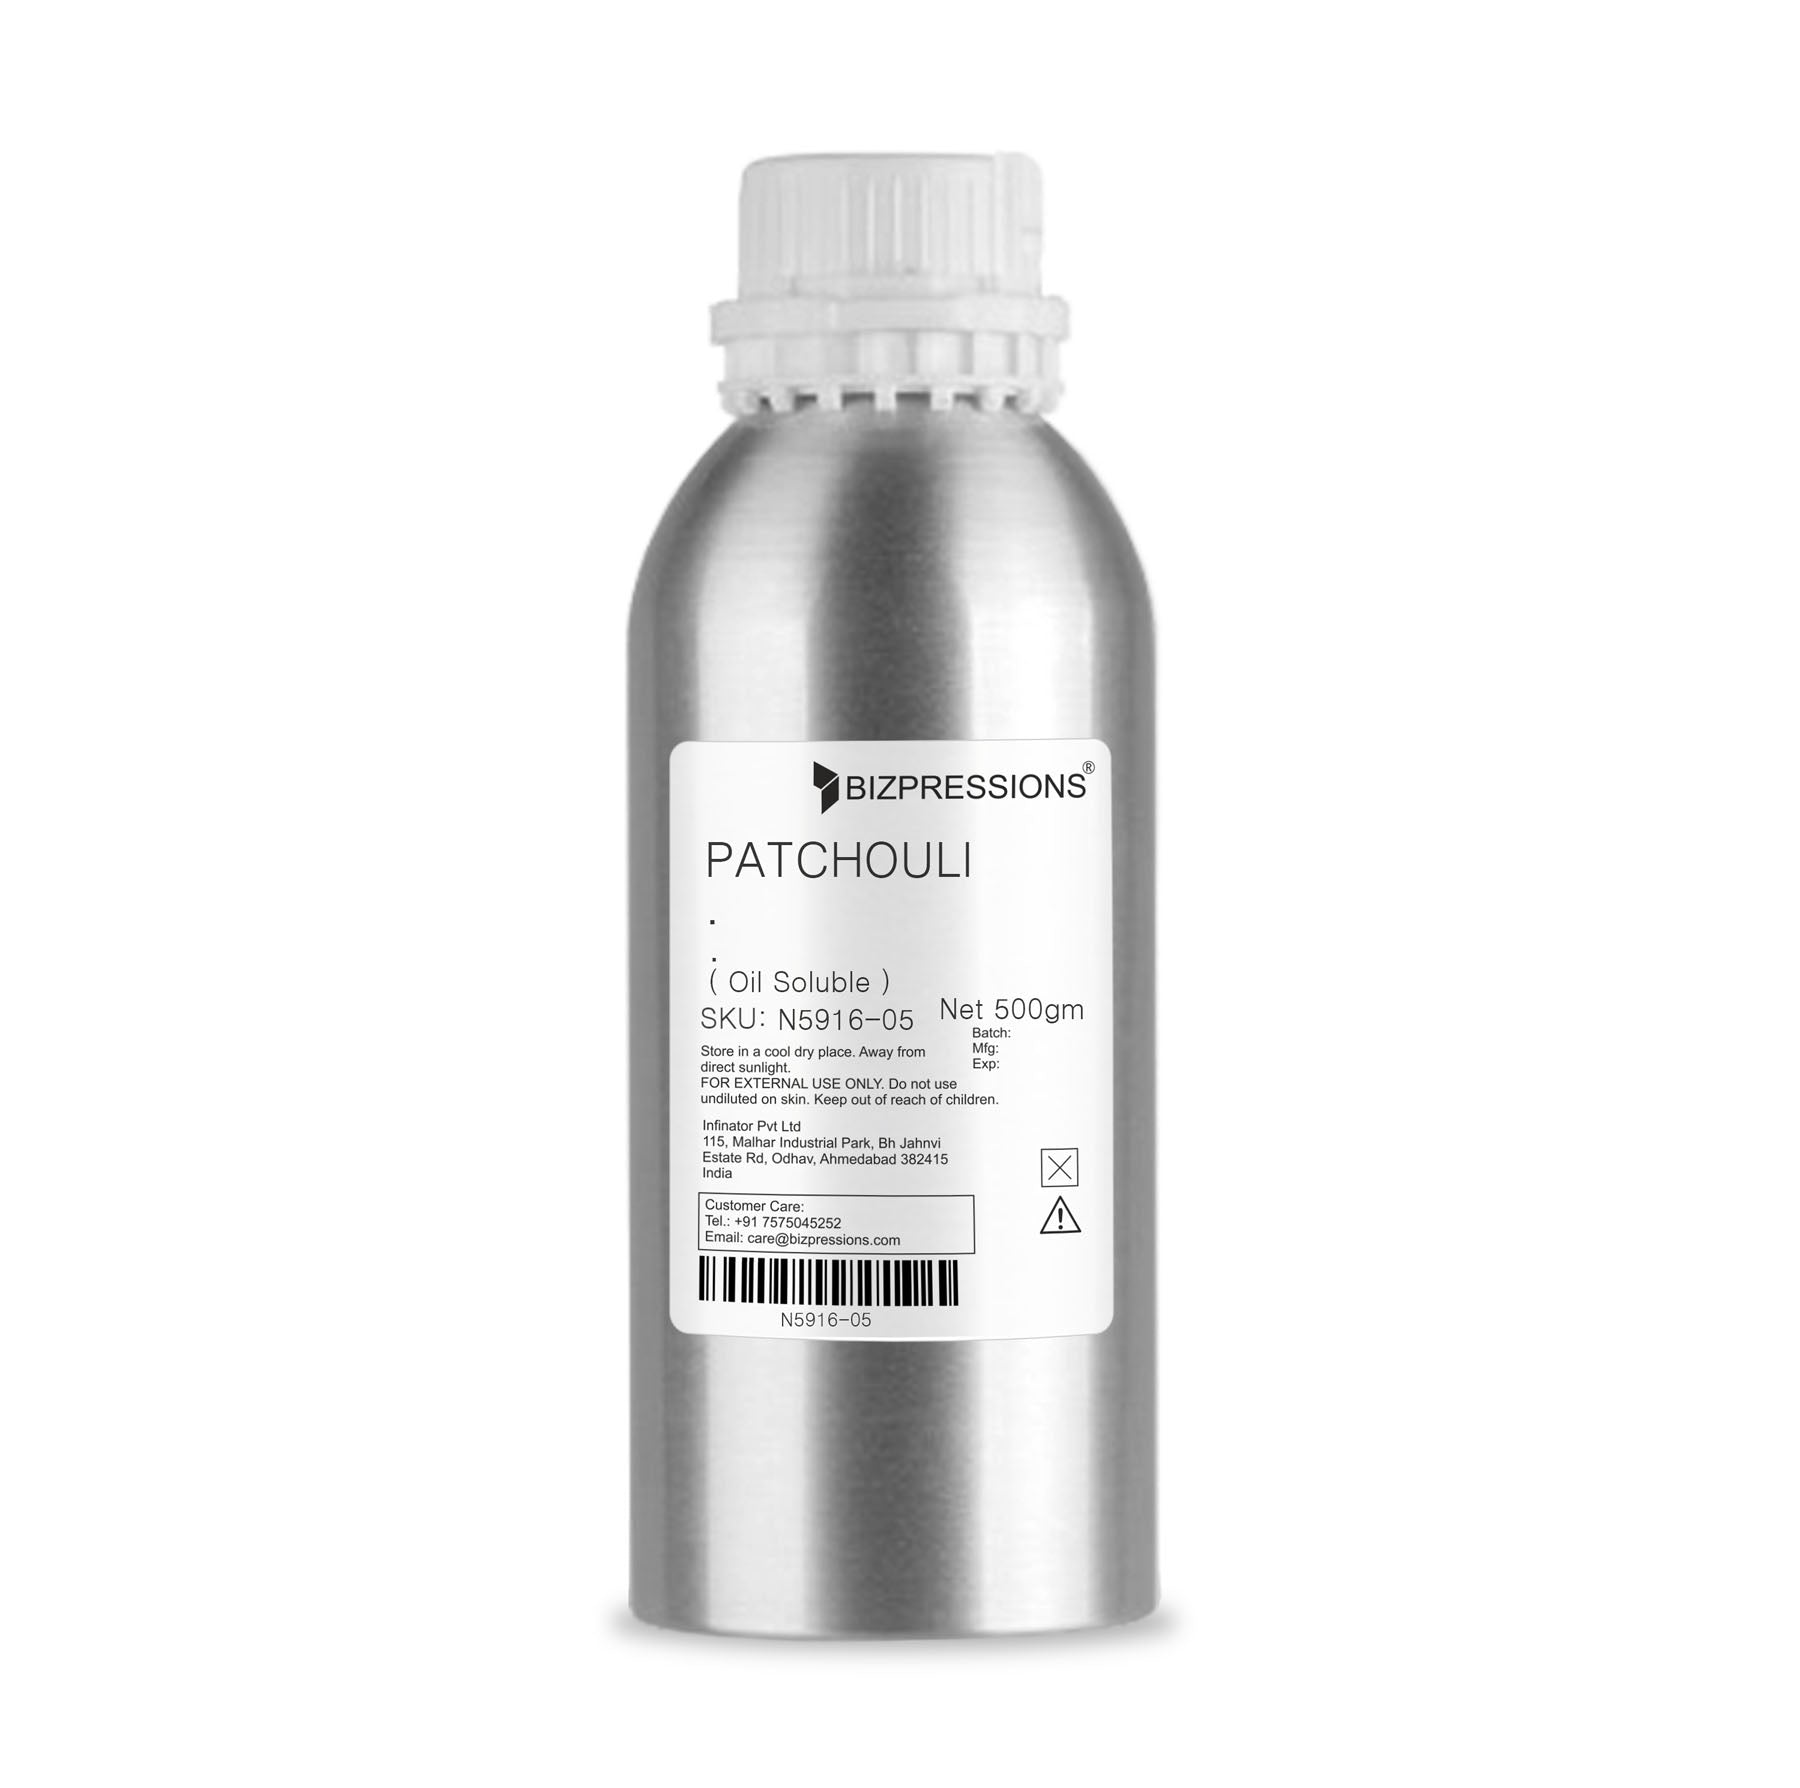 PATCHOULI FRAGRANCE - Fragrance ( Oil Soluble ) - 500 gm